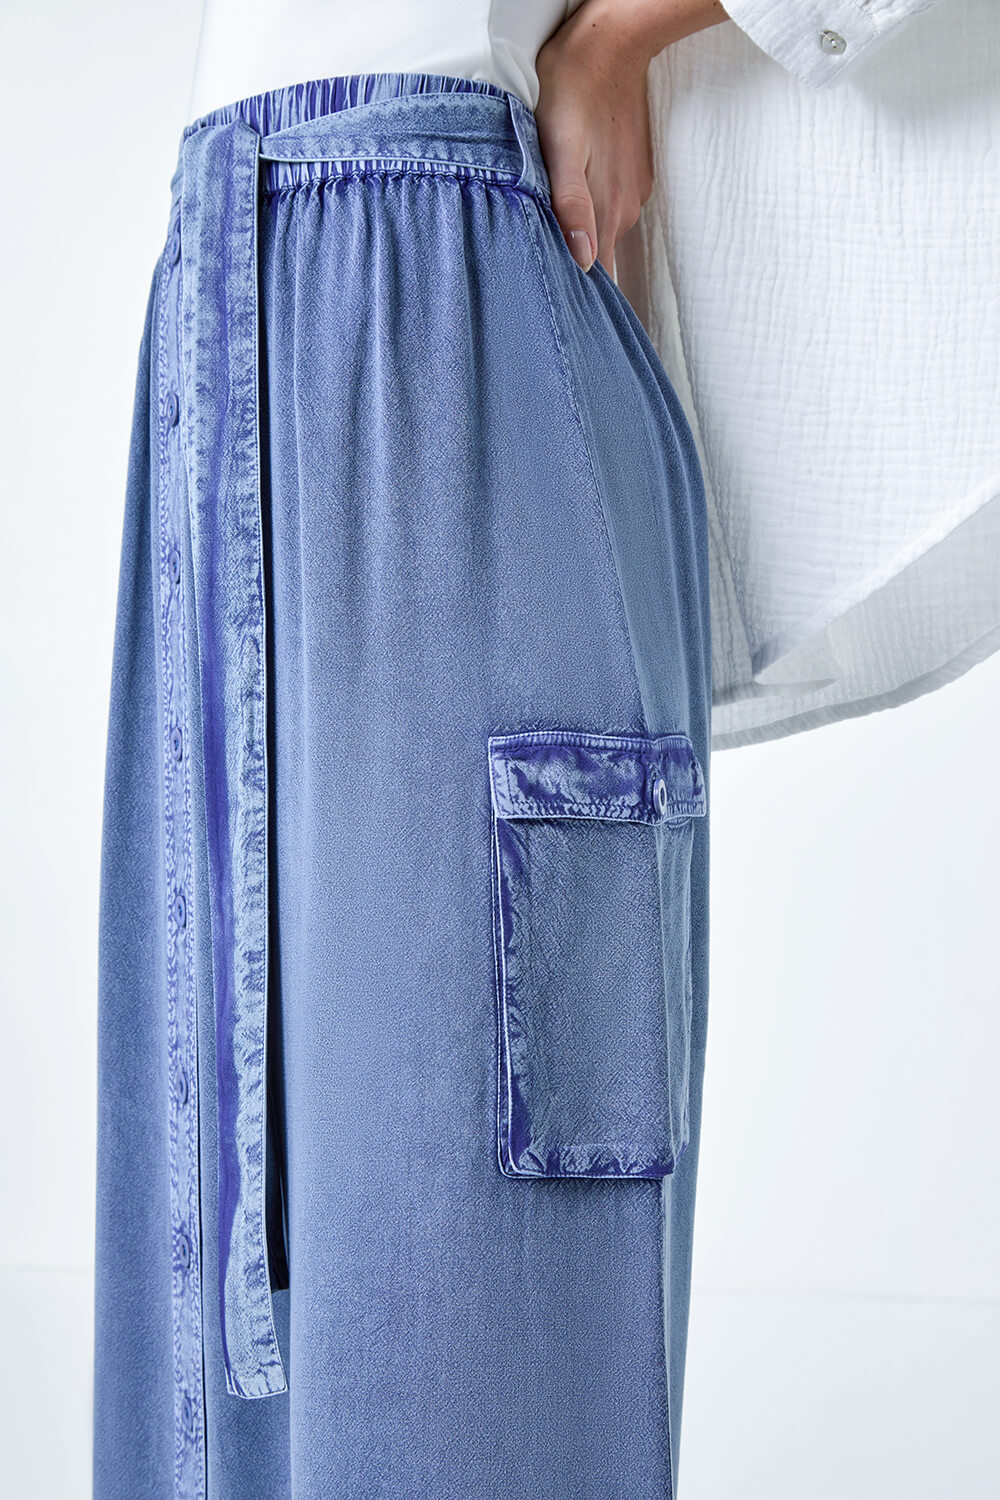 Denim Elastic Waist Button Front Pocket A Line Skirt, Image 5 of 5